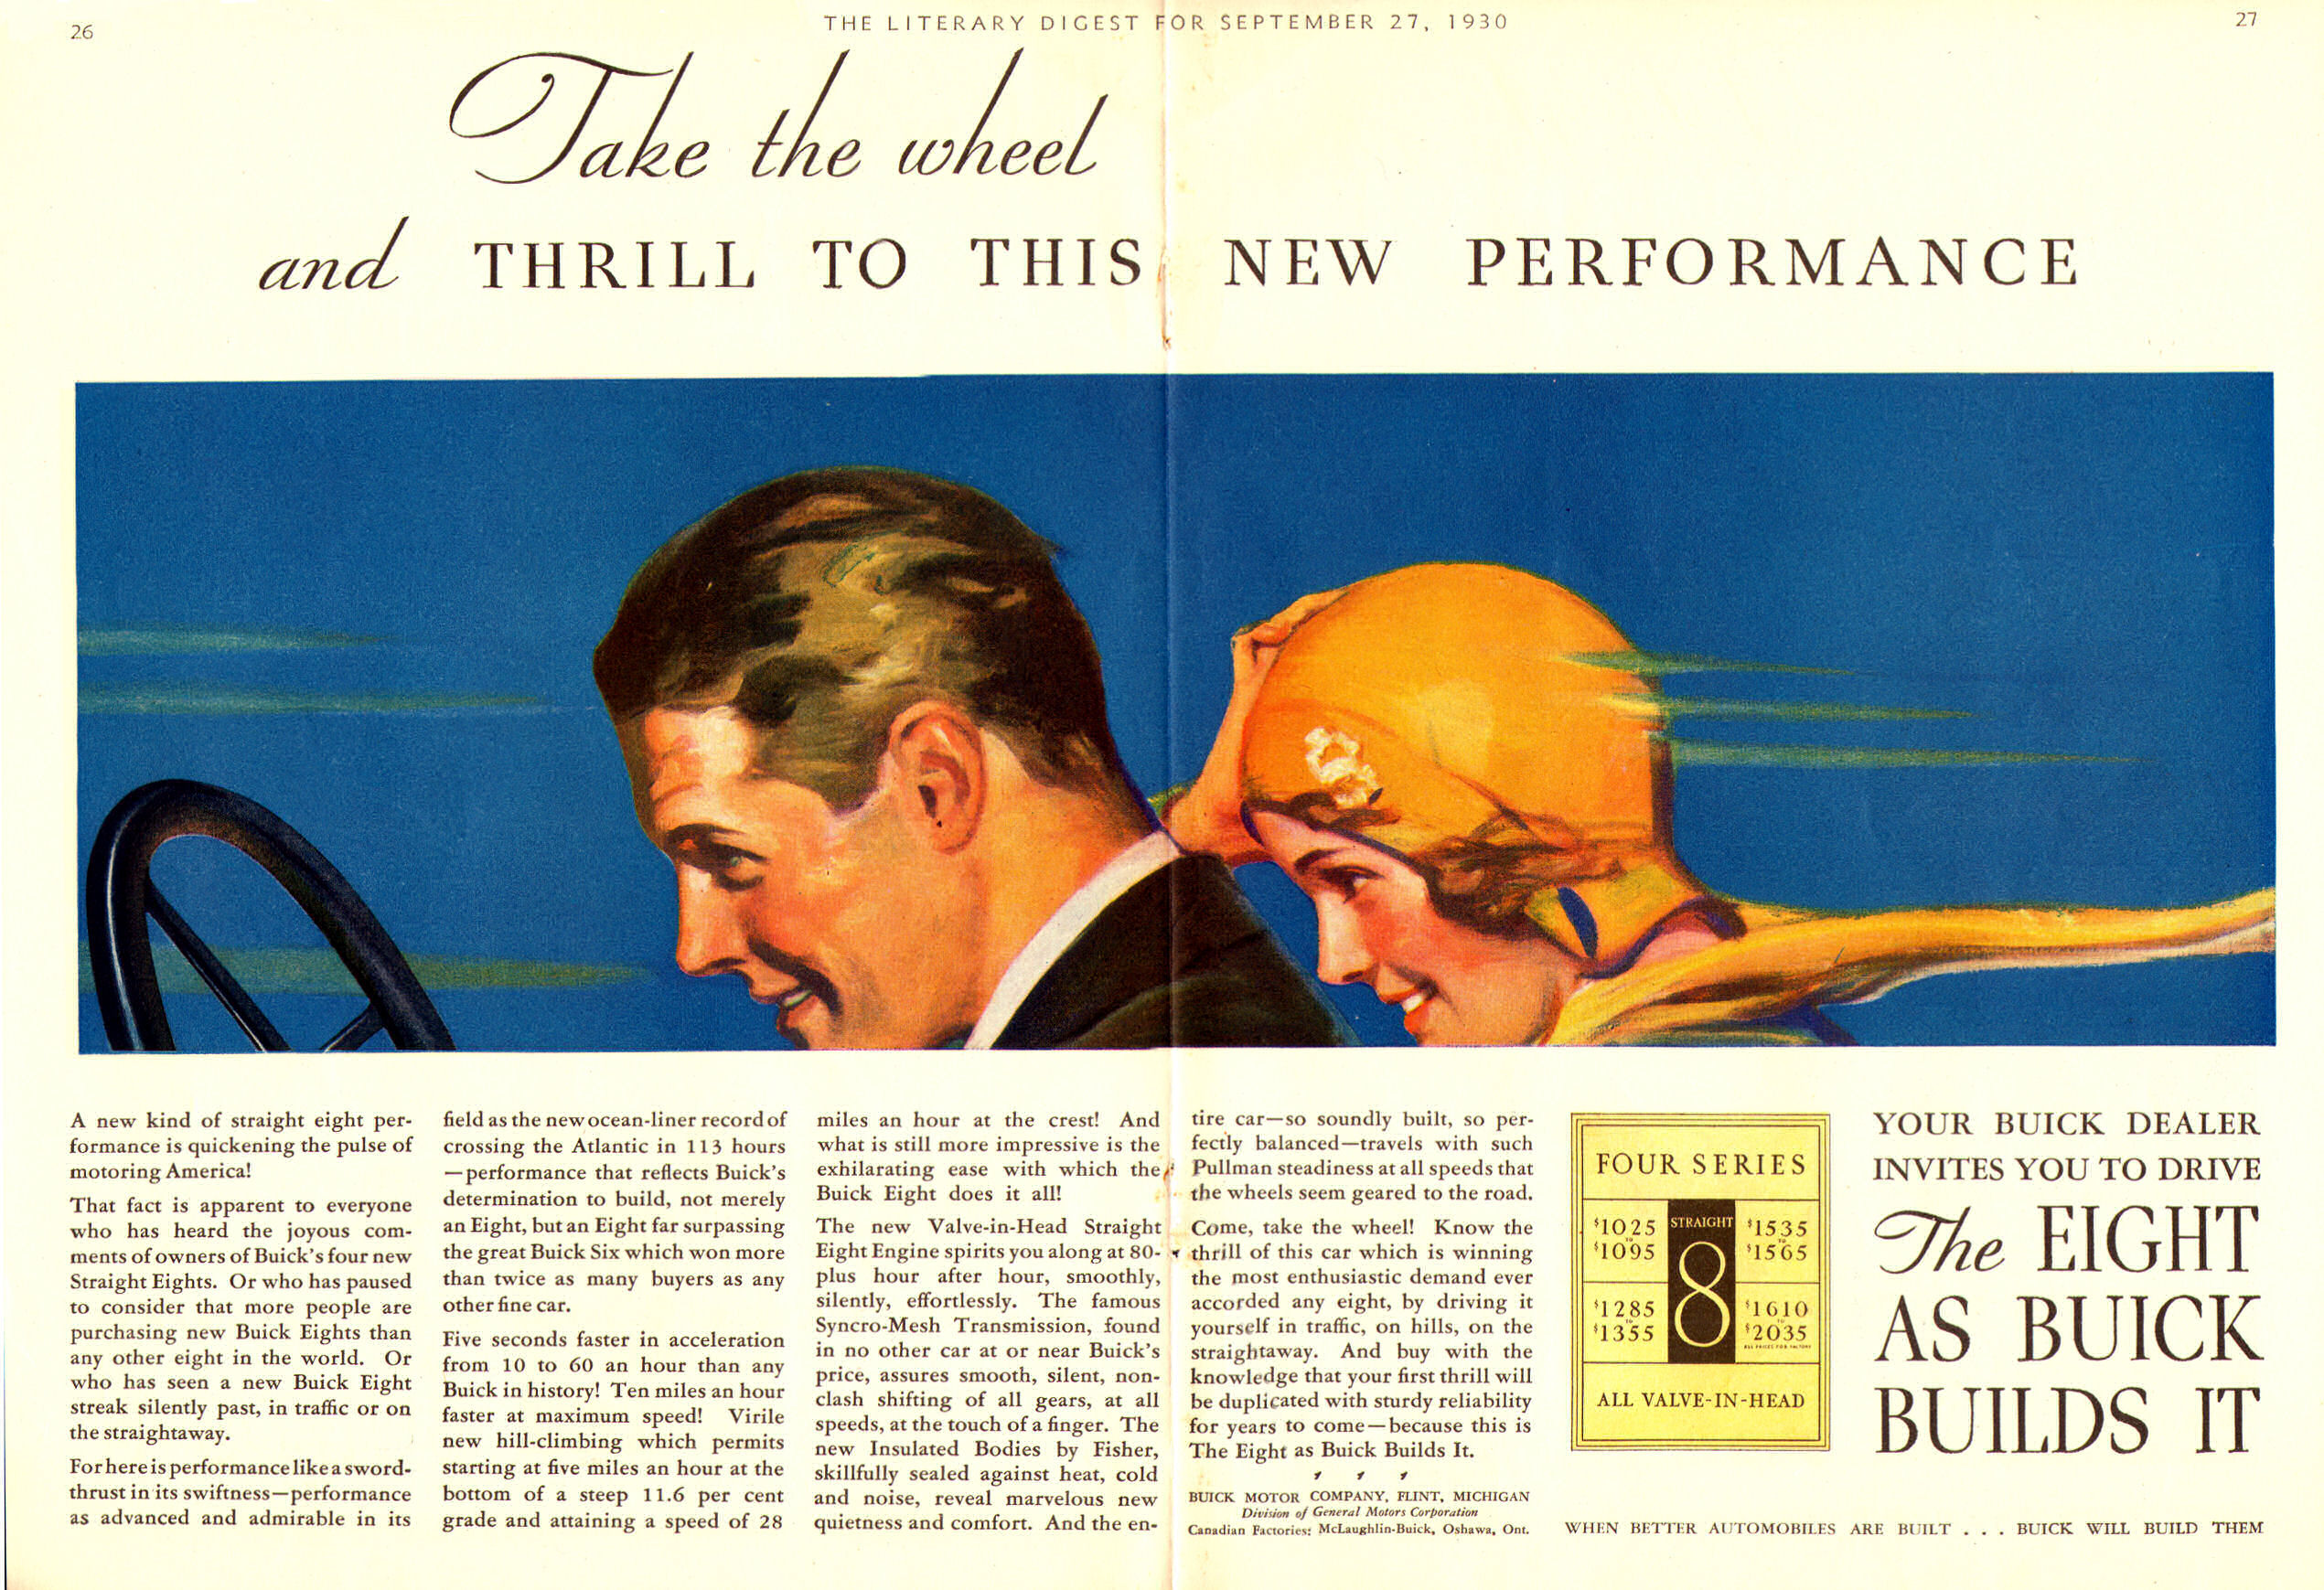 1931 Buick Auto Advertising